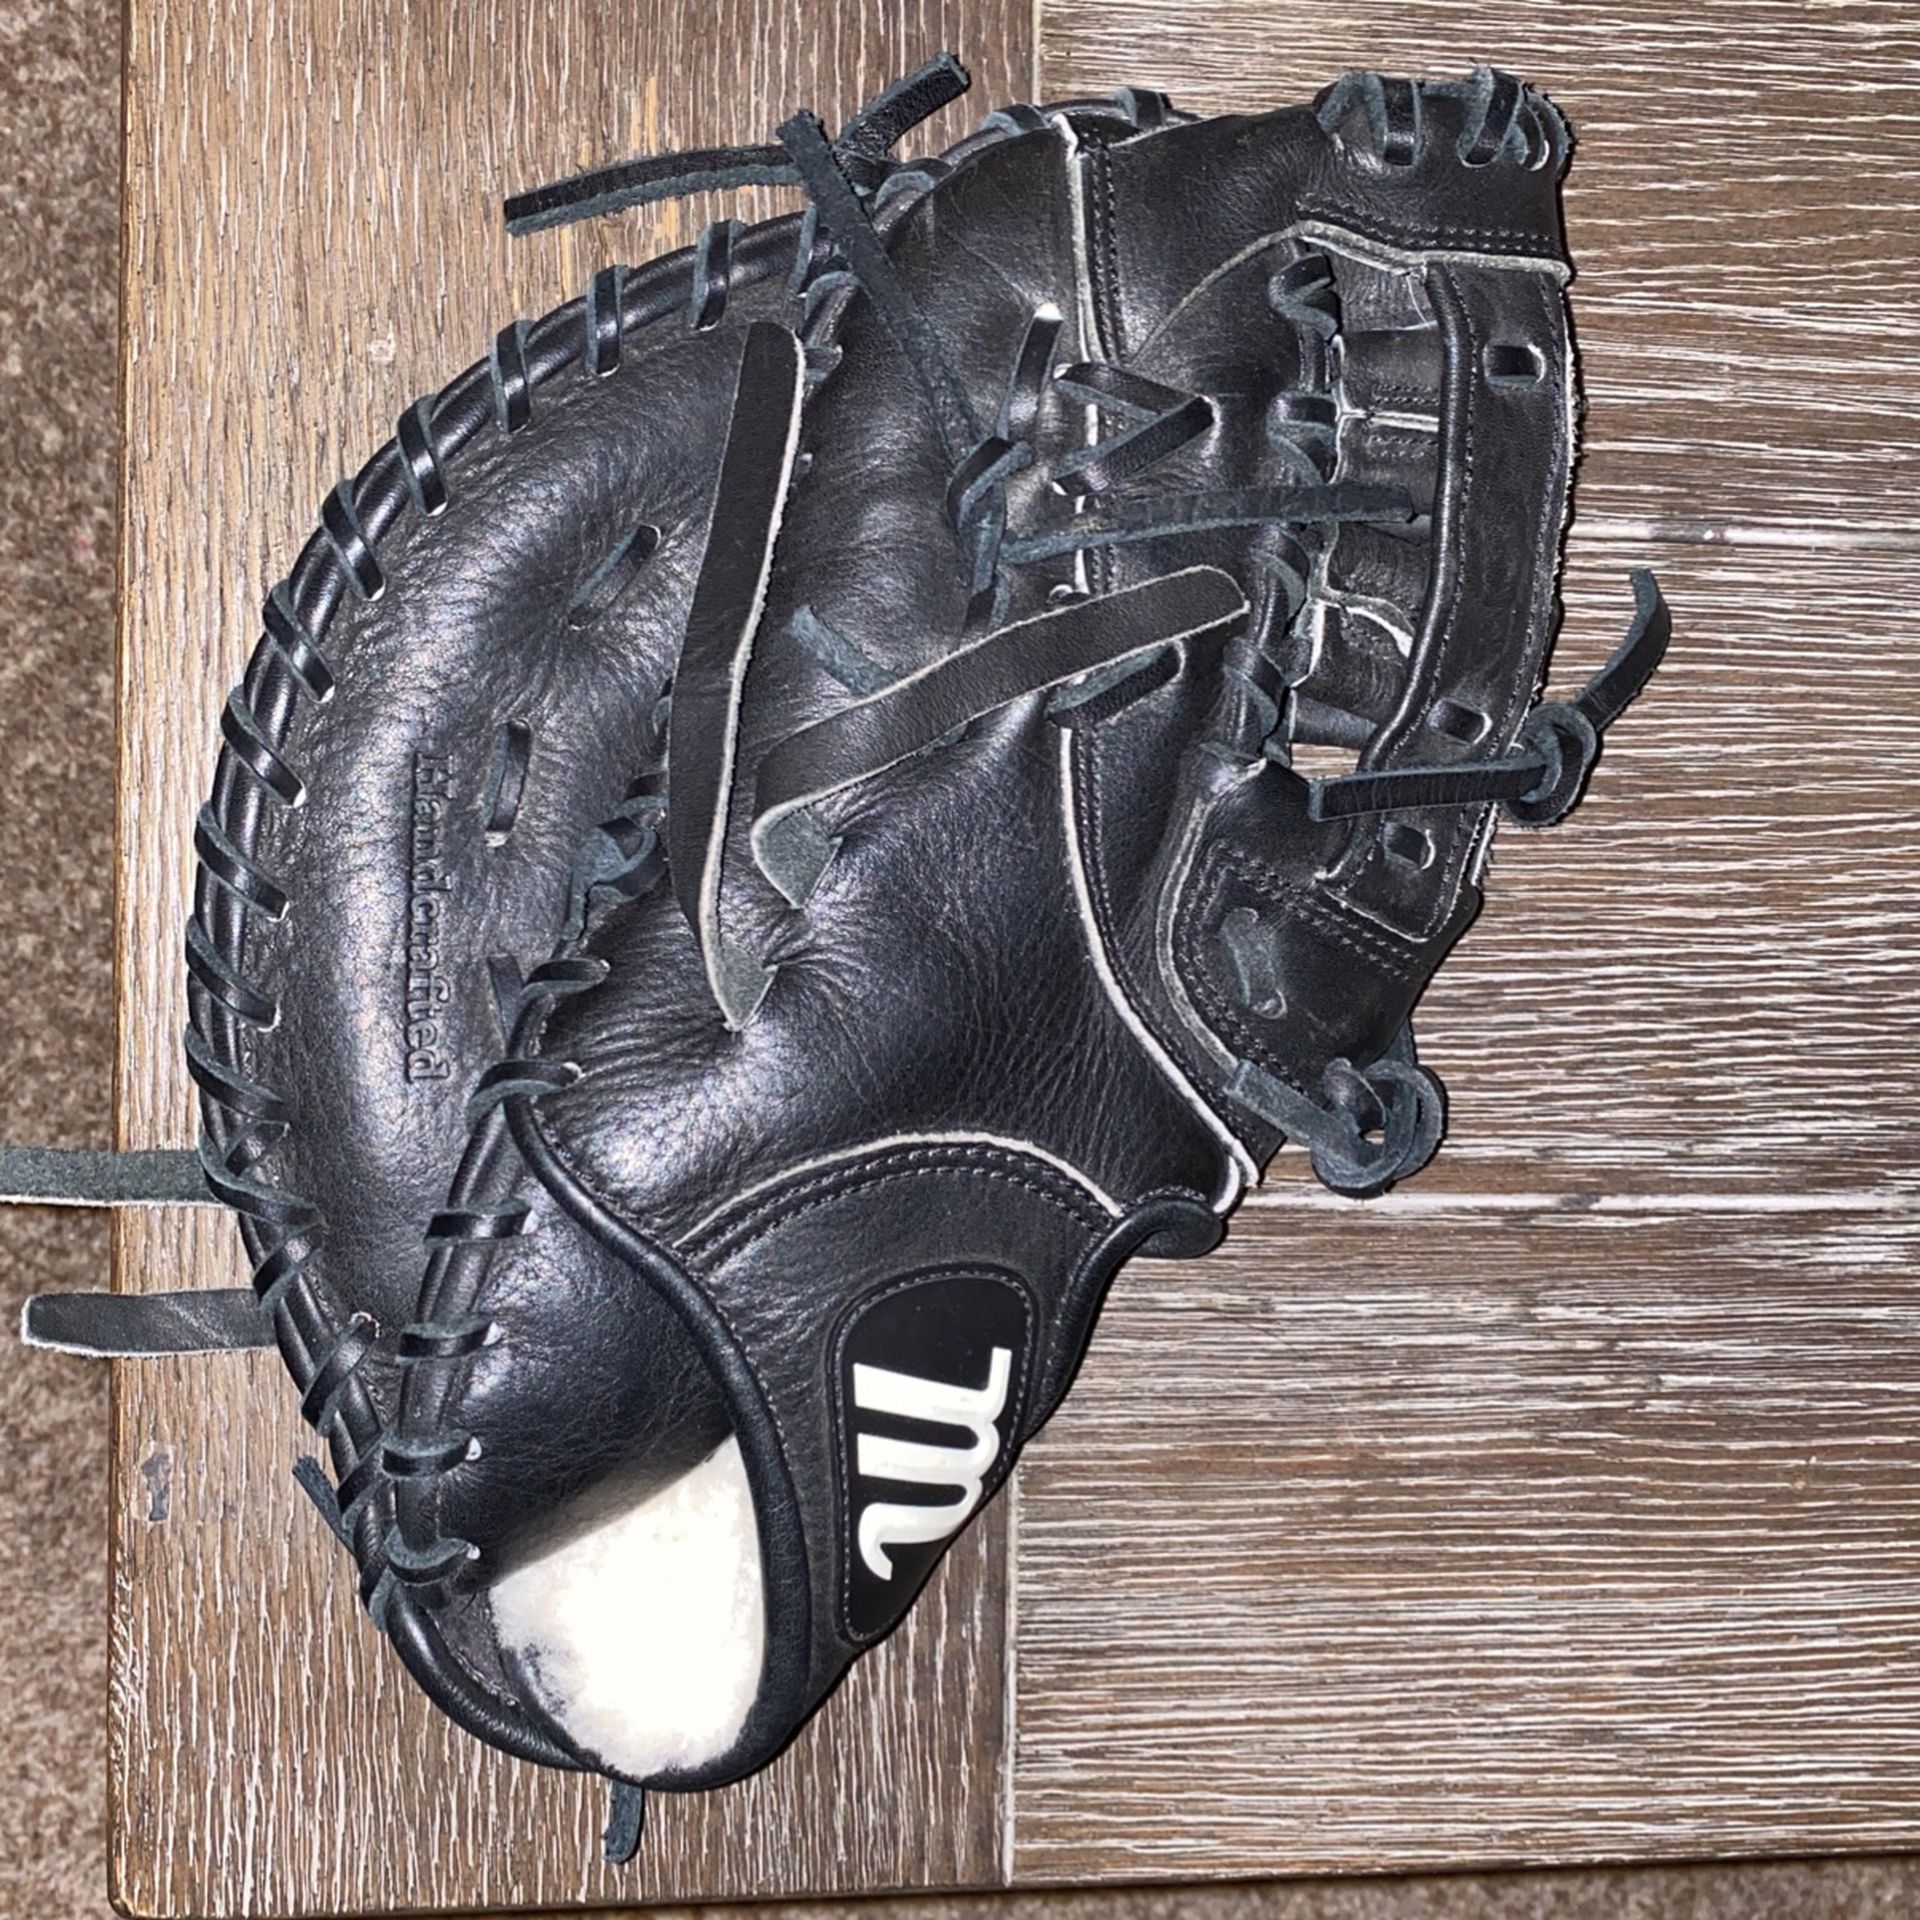 12 Inch Youth LH first baseman’s Glove